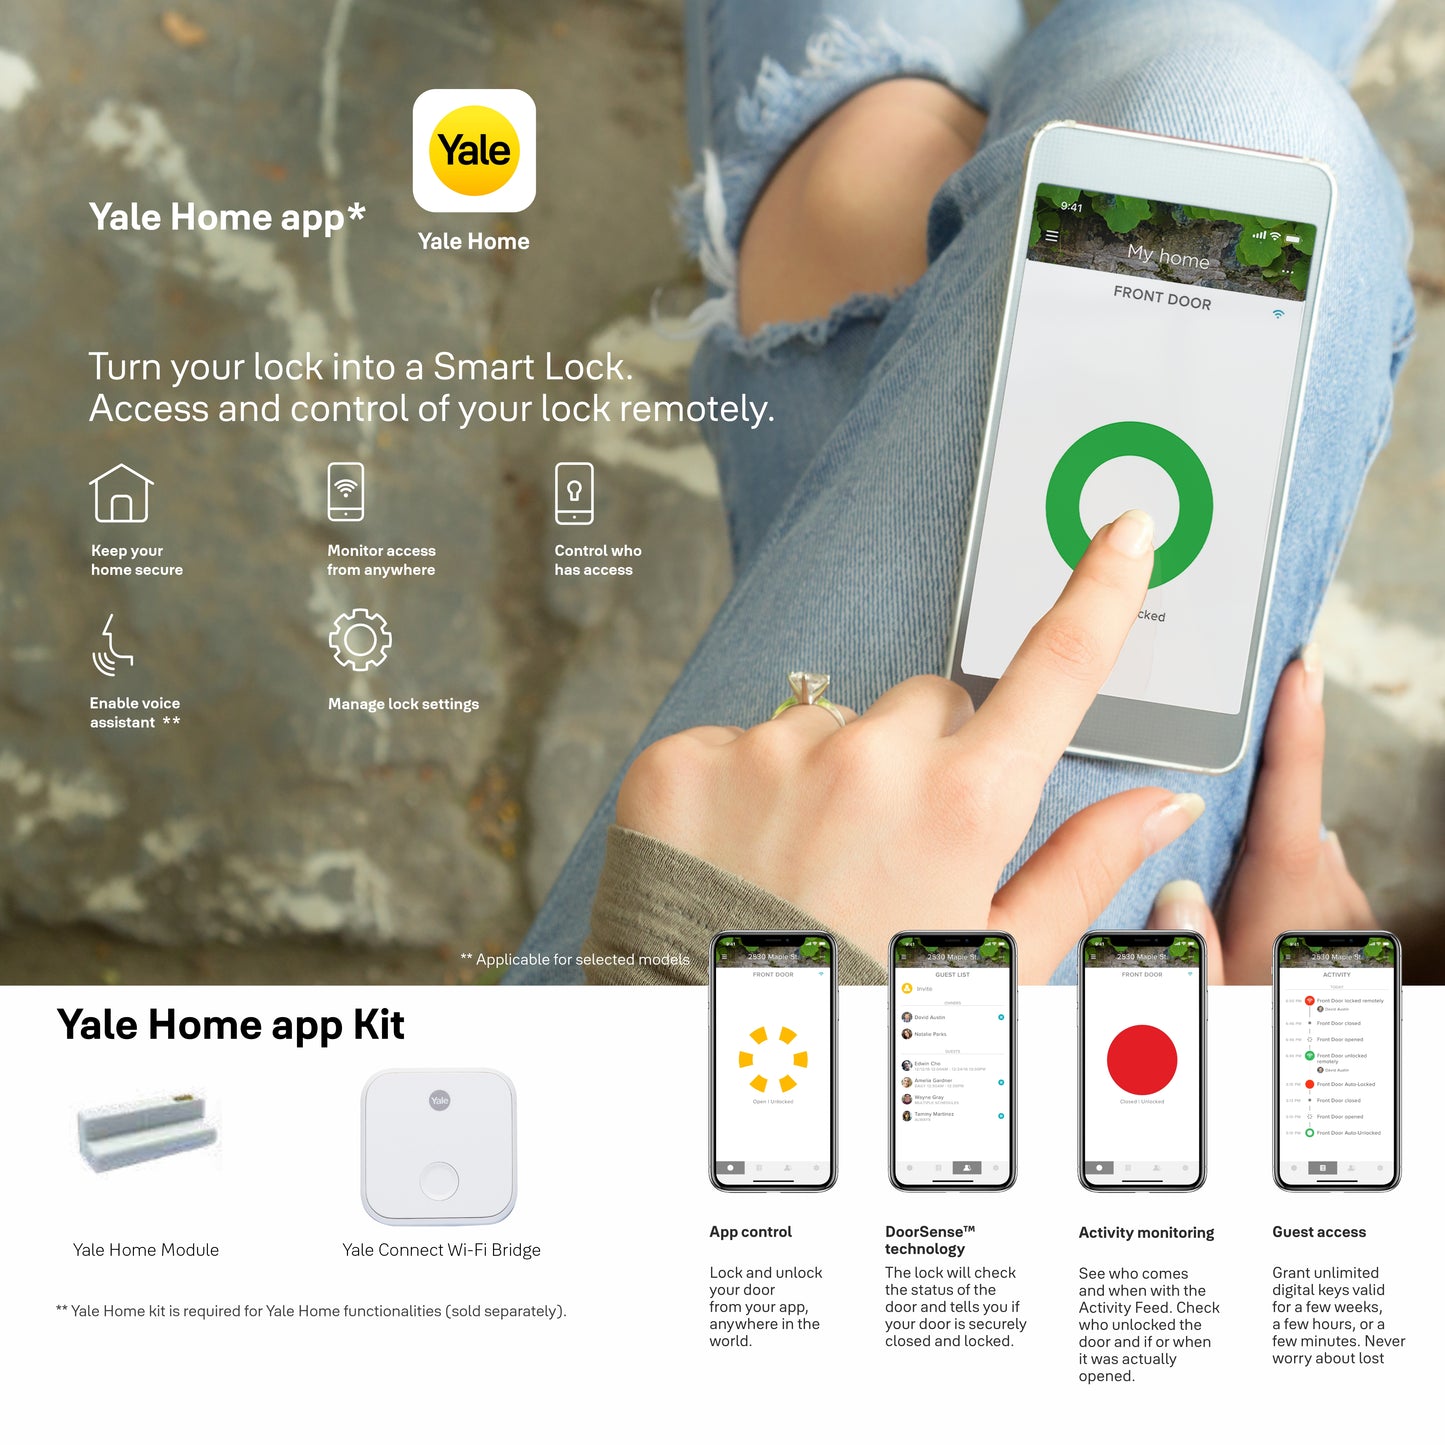 YDM 4115 -A Series, Biometric Smart Lock, Brown with Fingerprint, PIN, manual key and Yale Home App